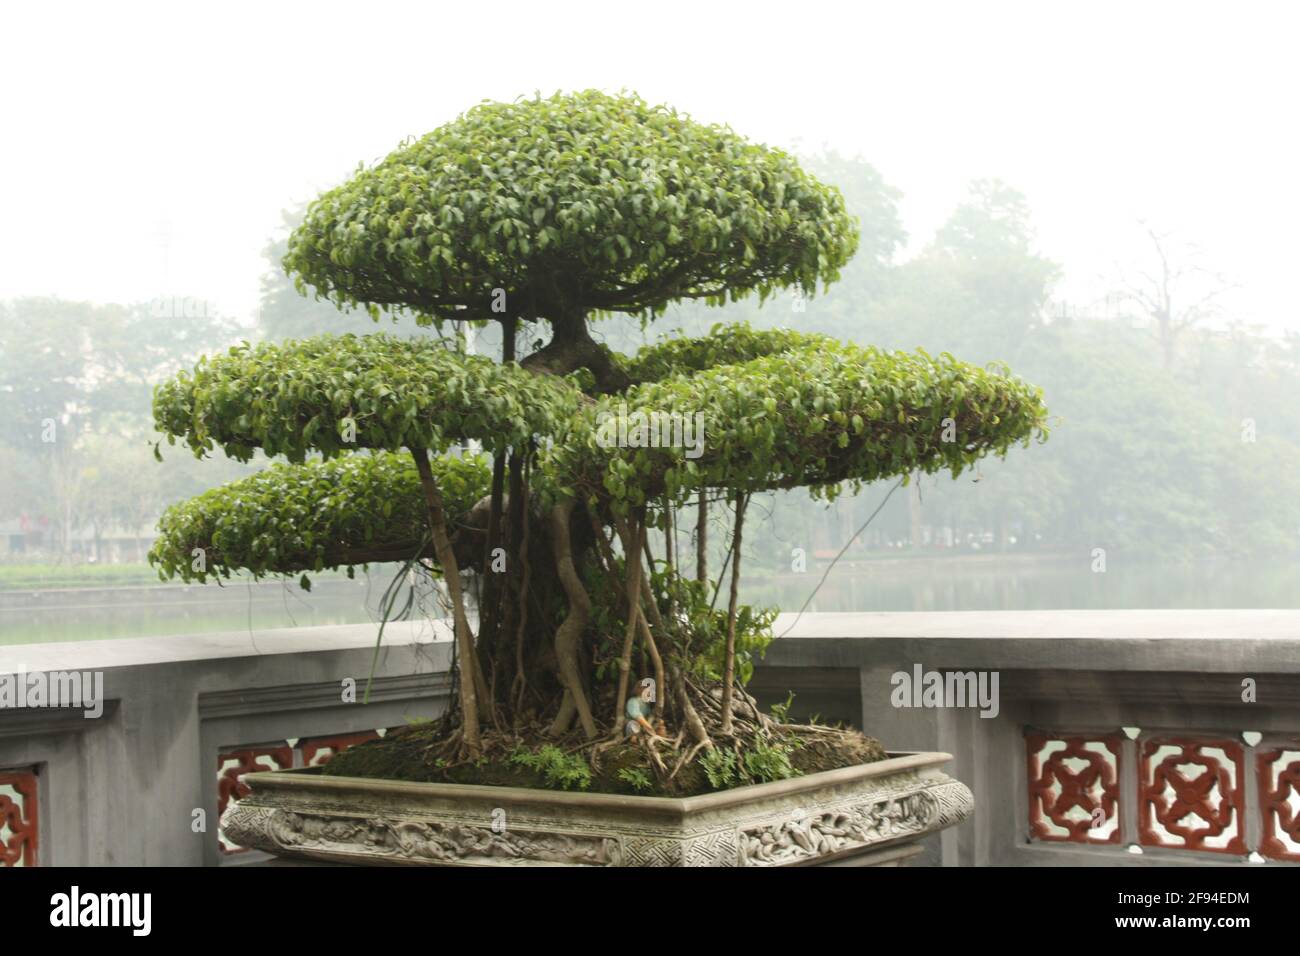 Bonsai tree bonzai tree outdoor hi-res stock photography and images - Alamy